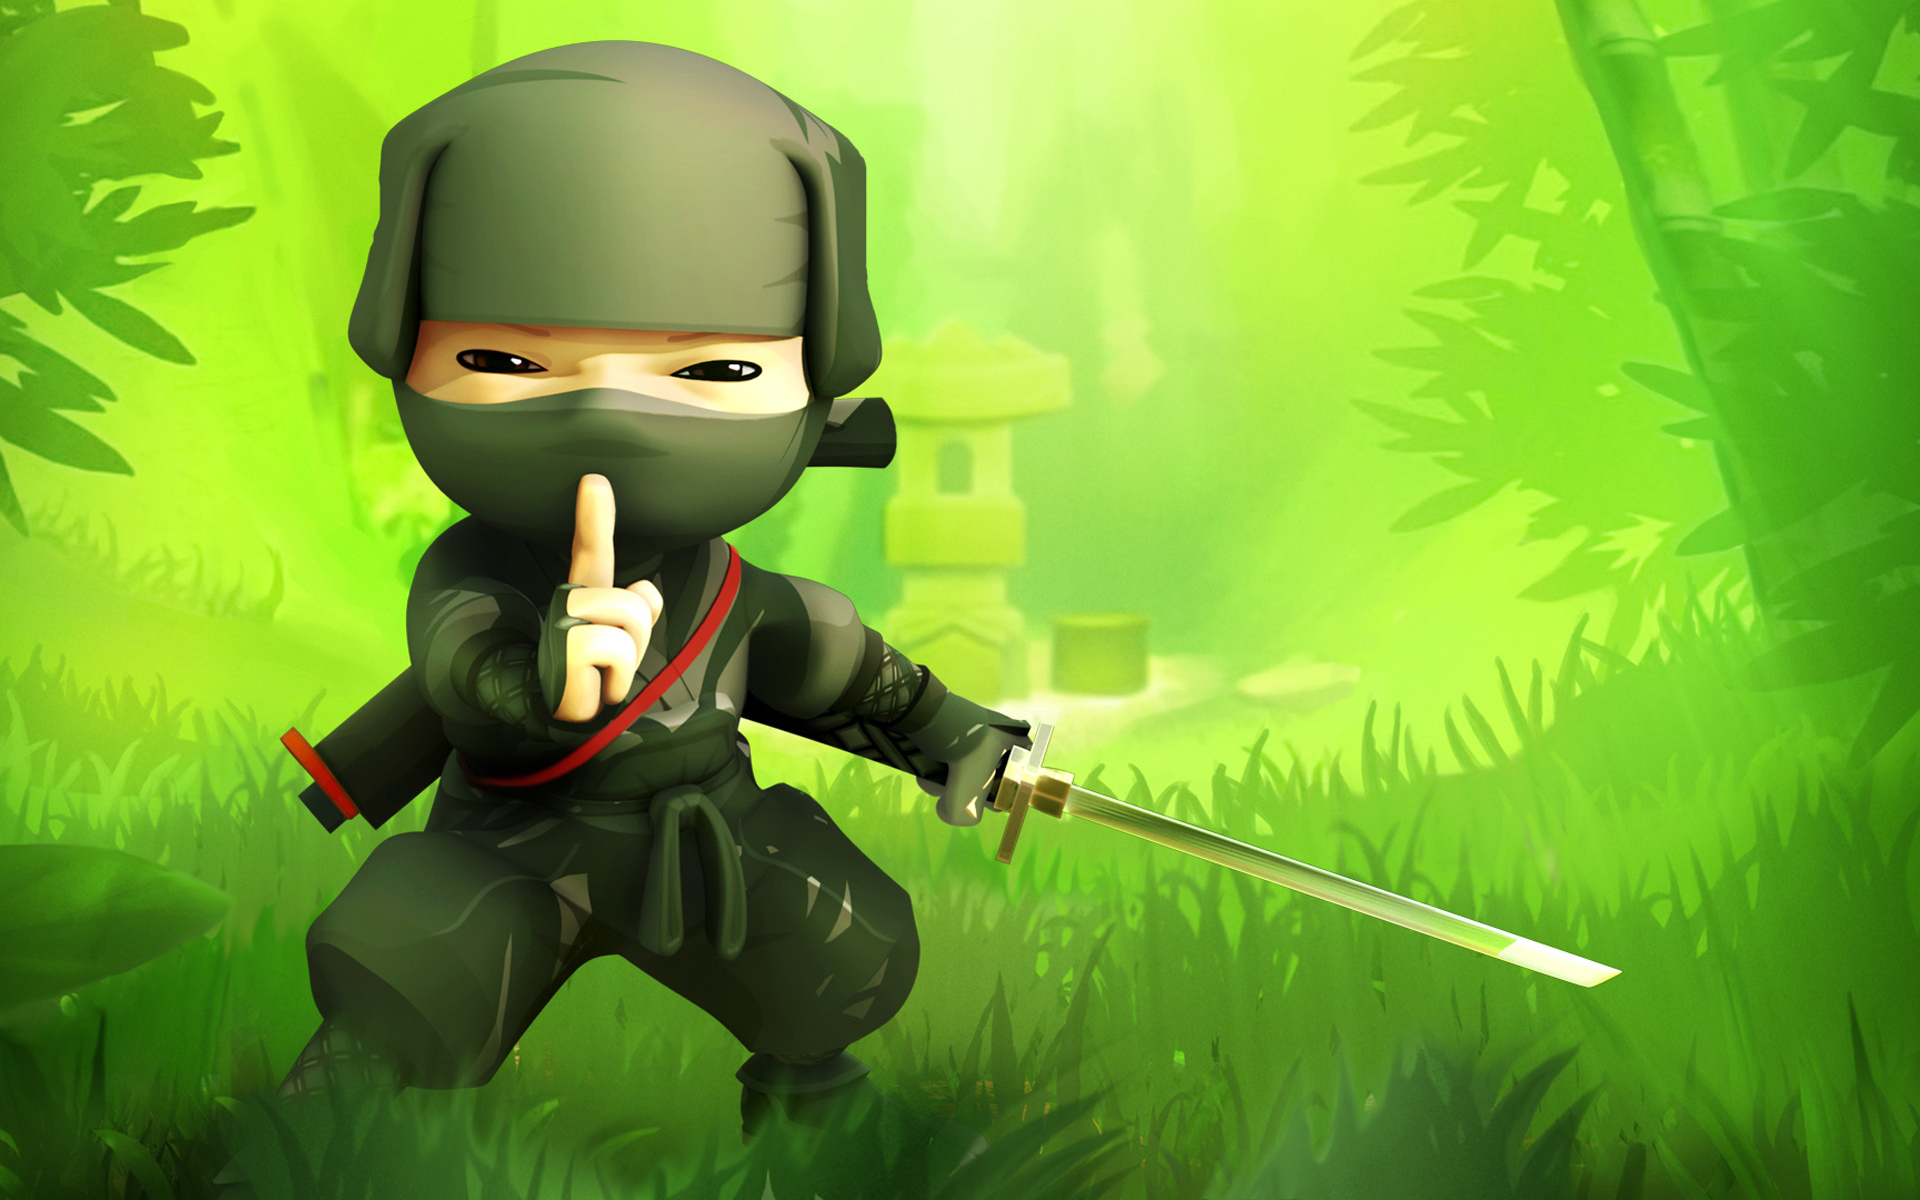 Mini ninja